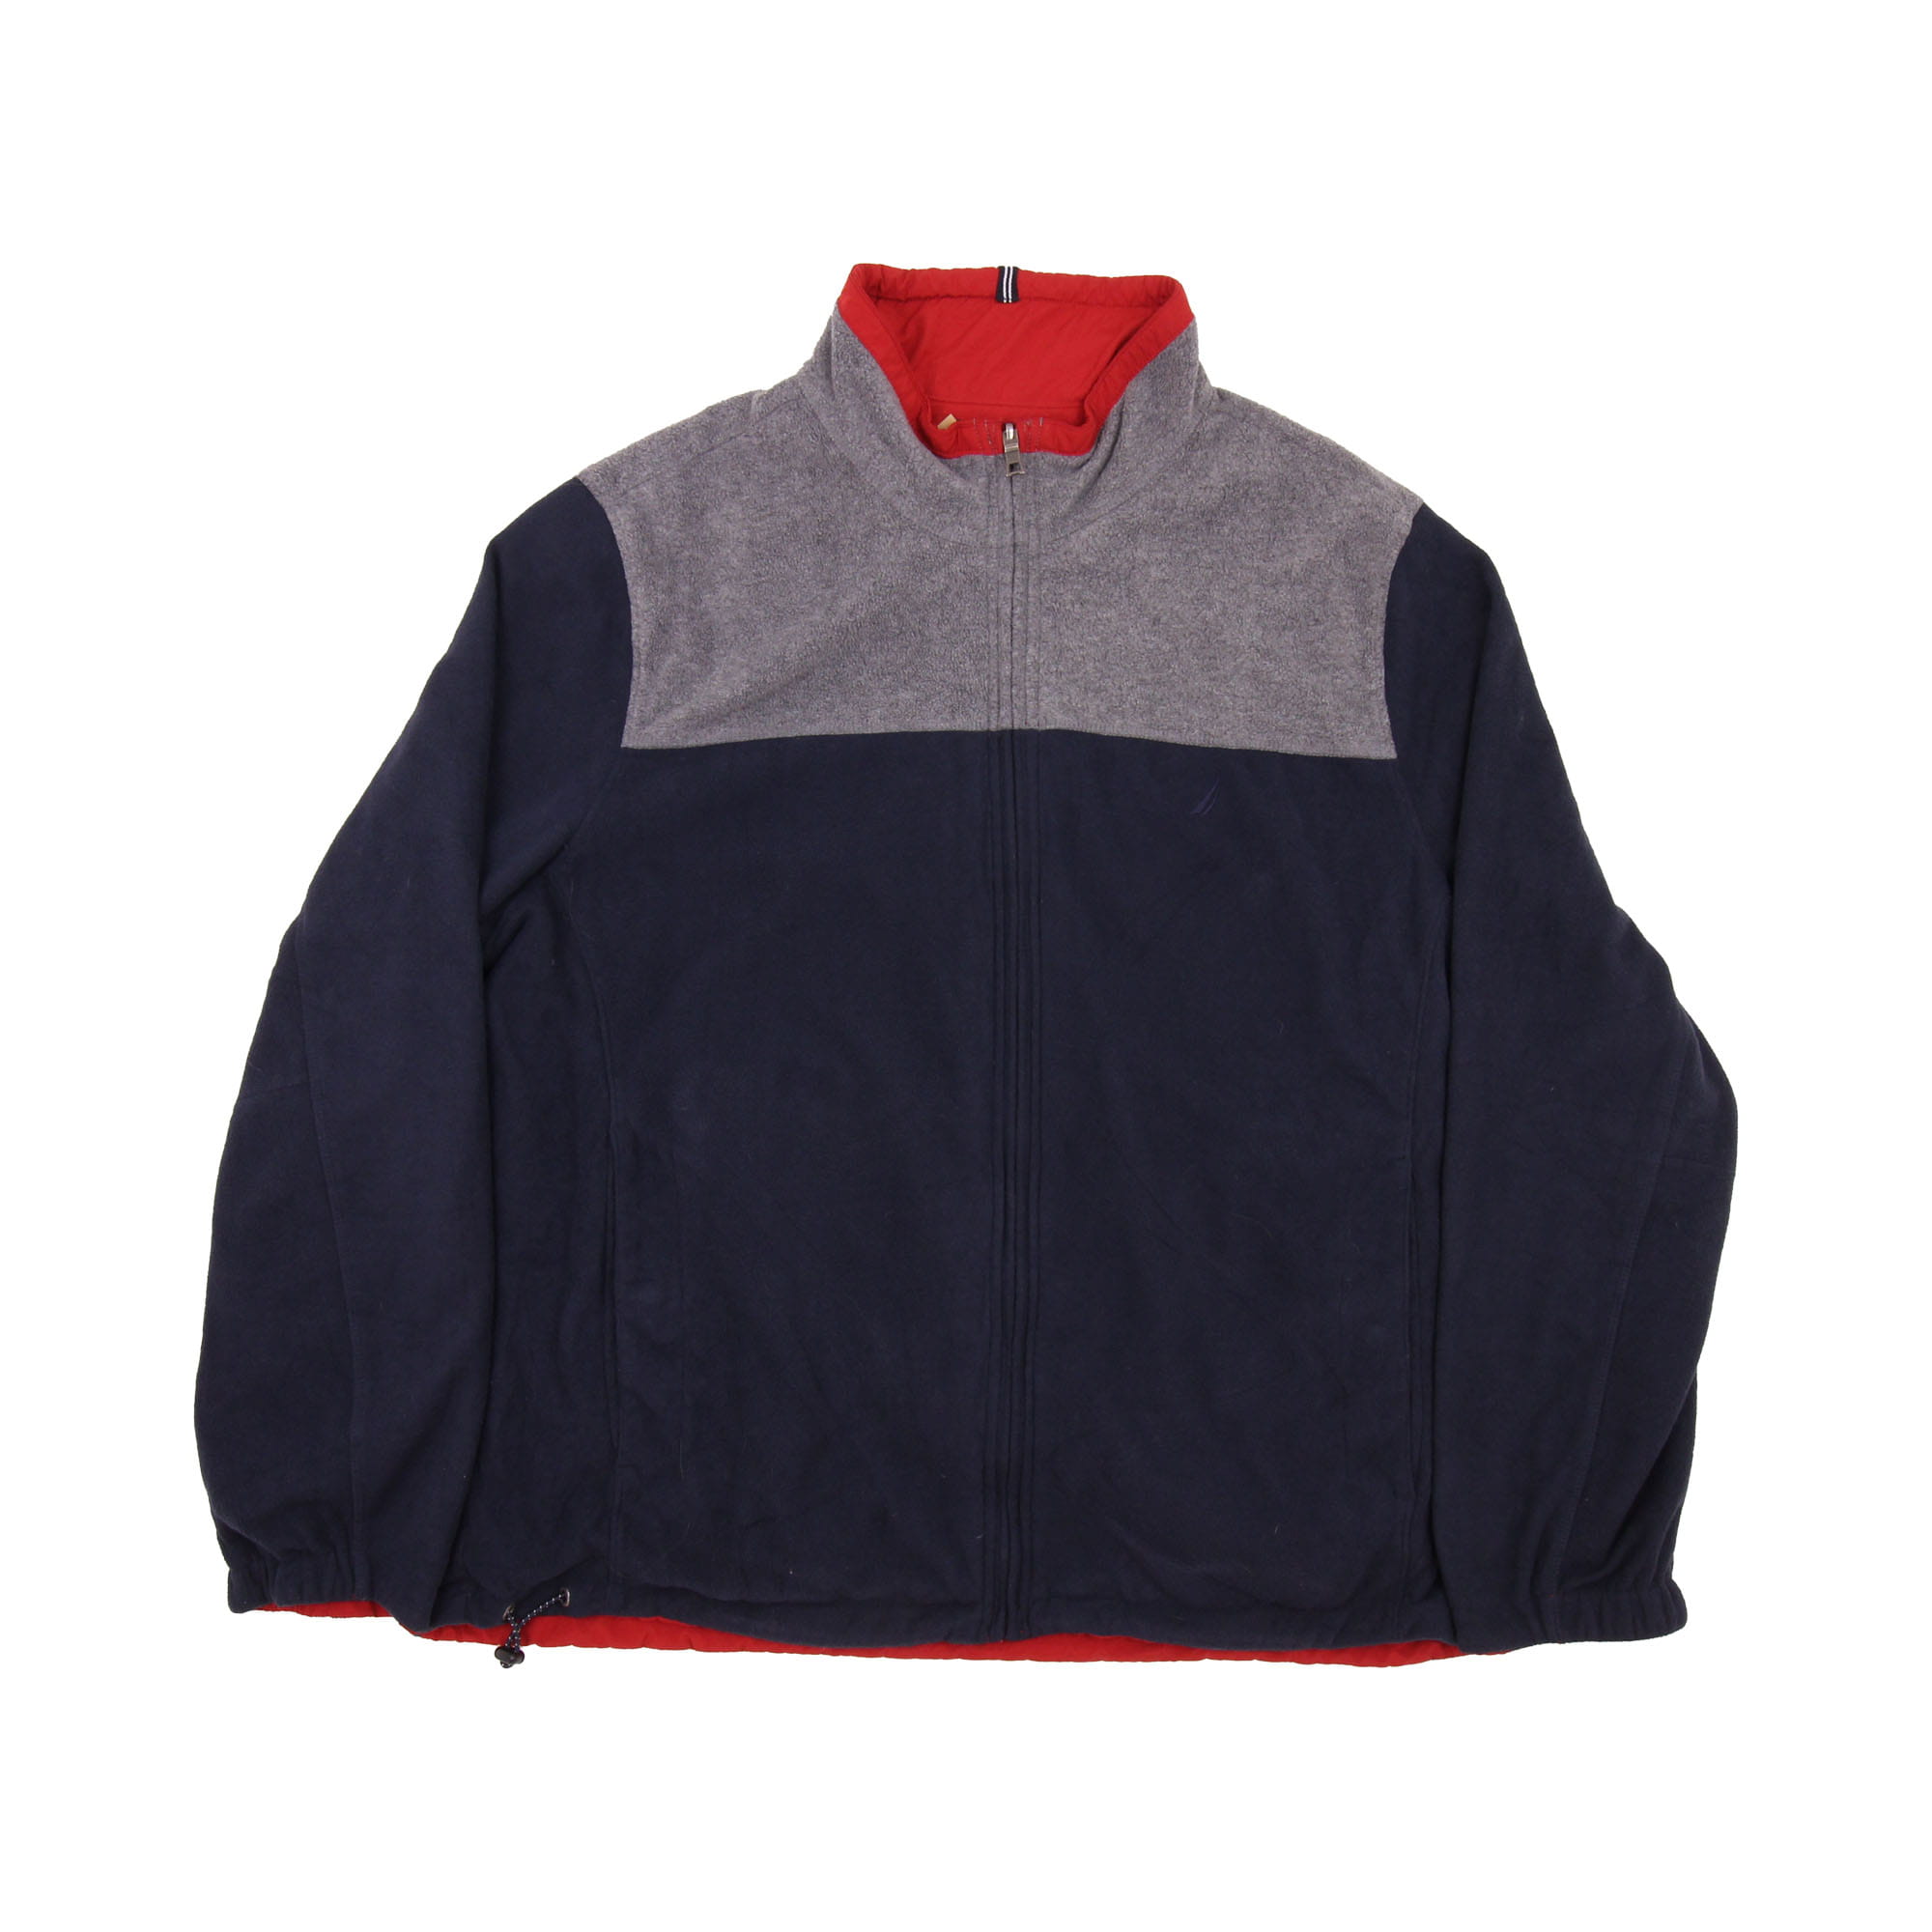 Nautica Thin Jacket Red -  XL